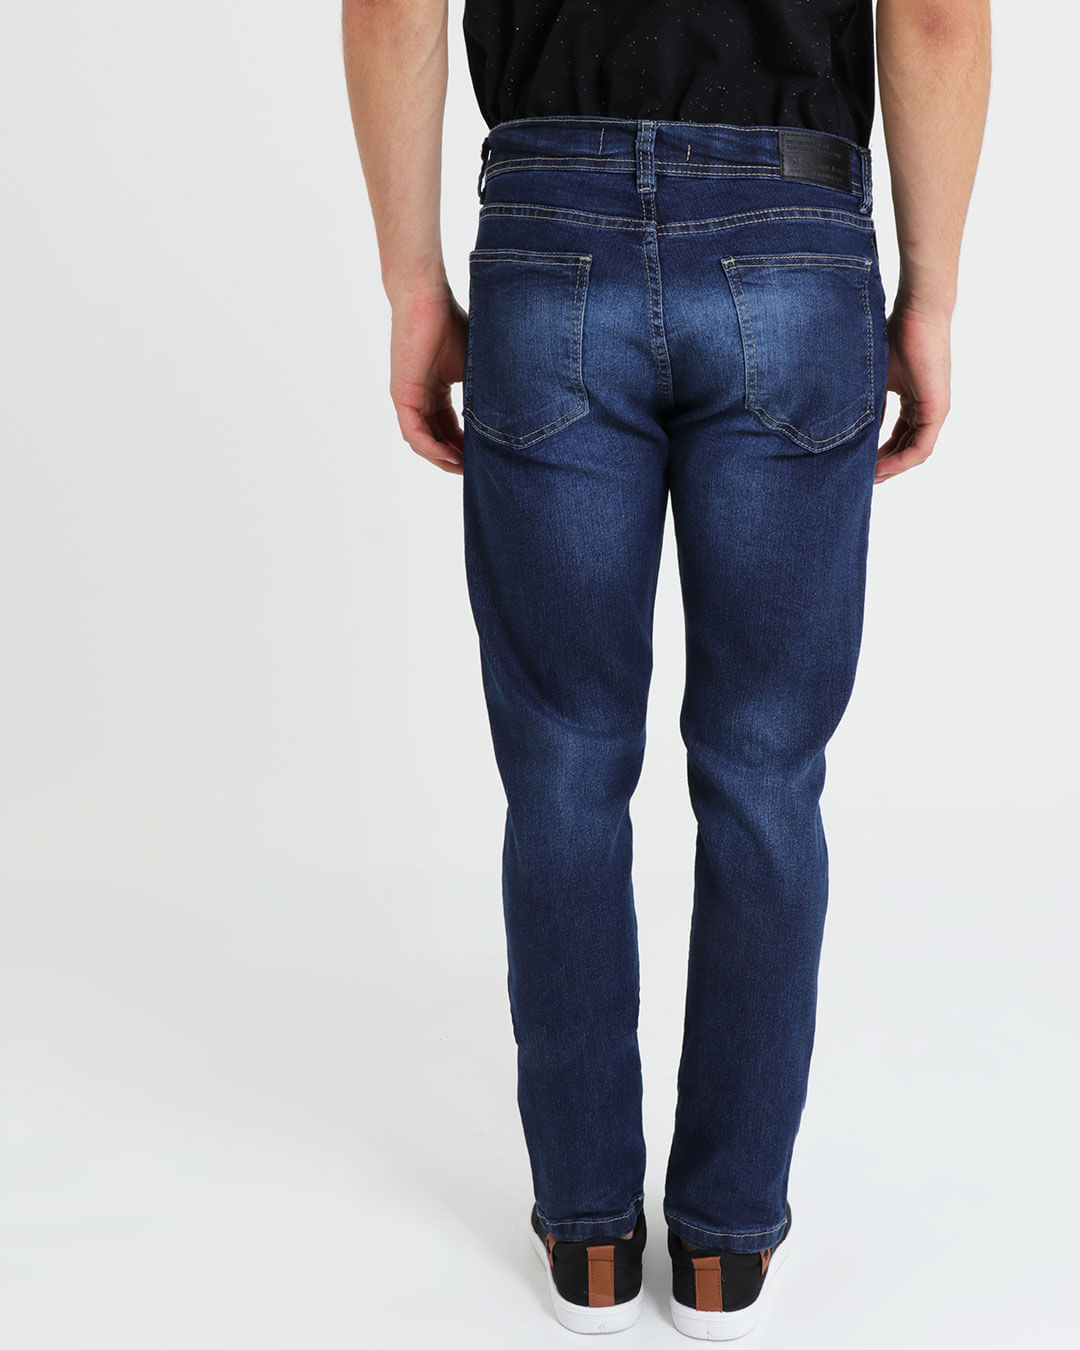 Calca-Jeans-Masculina-Puidos-Paradox-Jeans-Azul